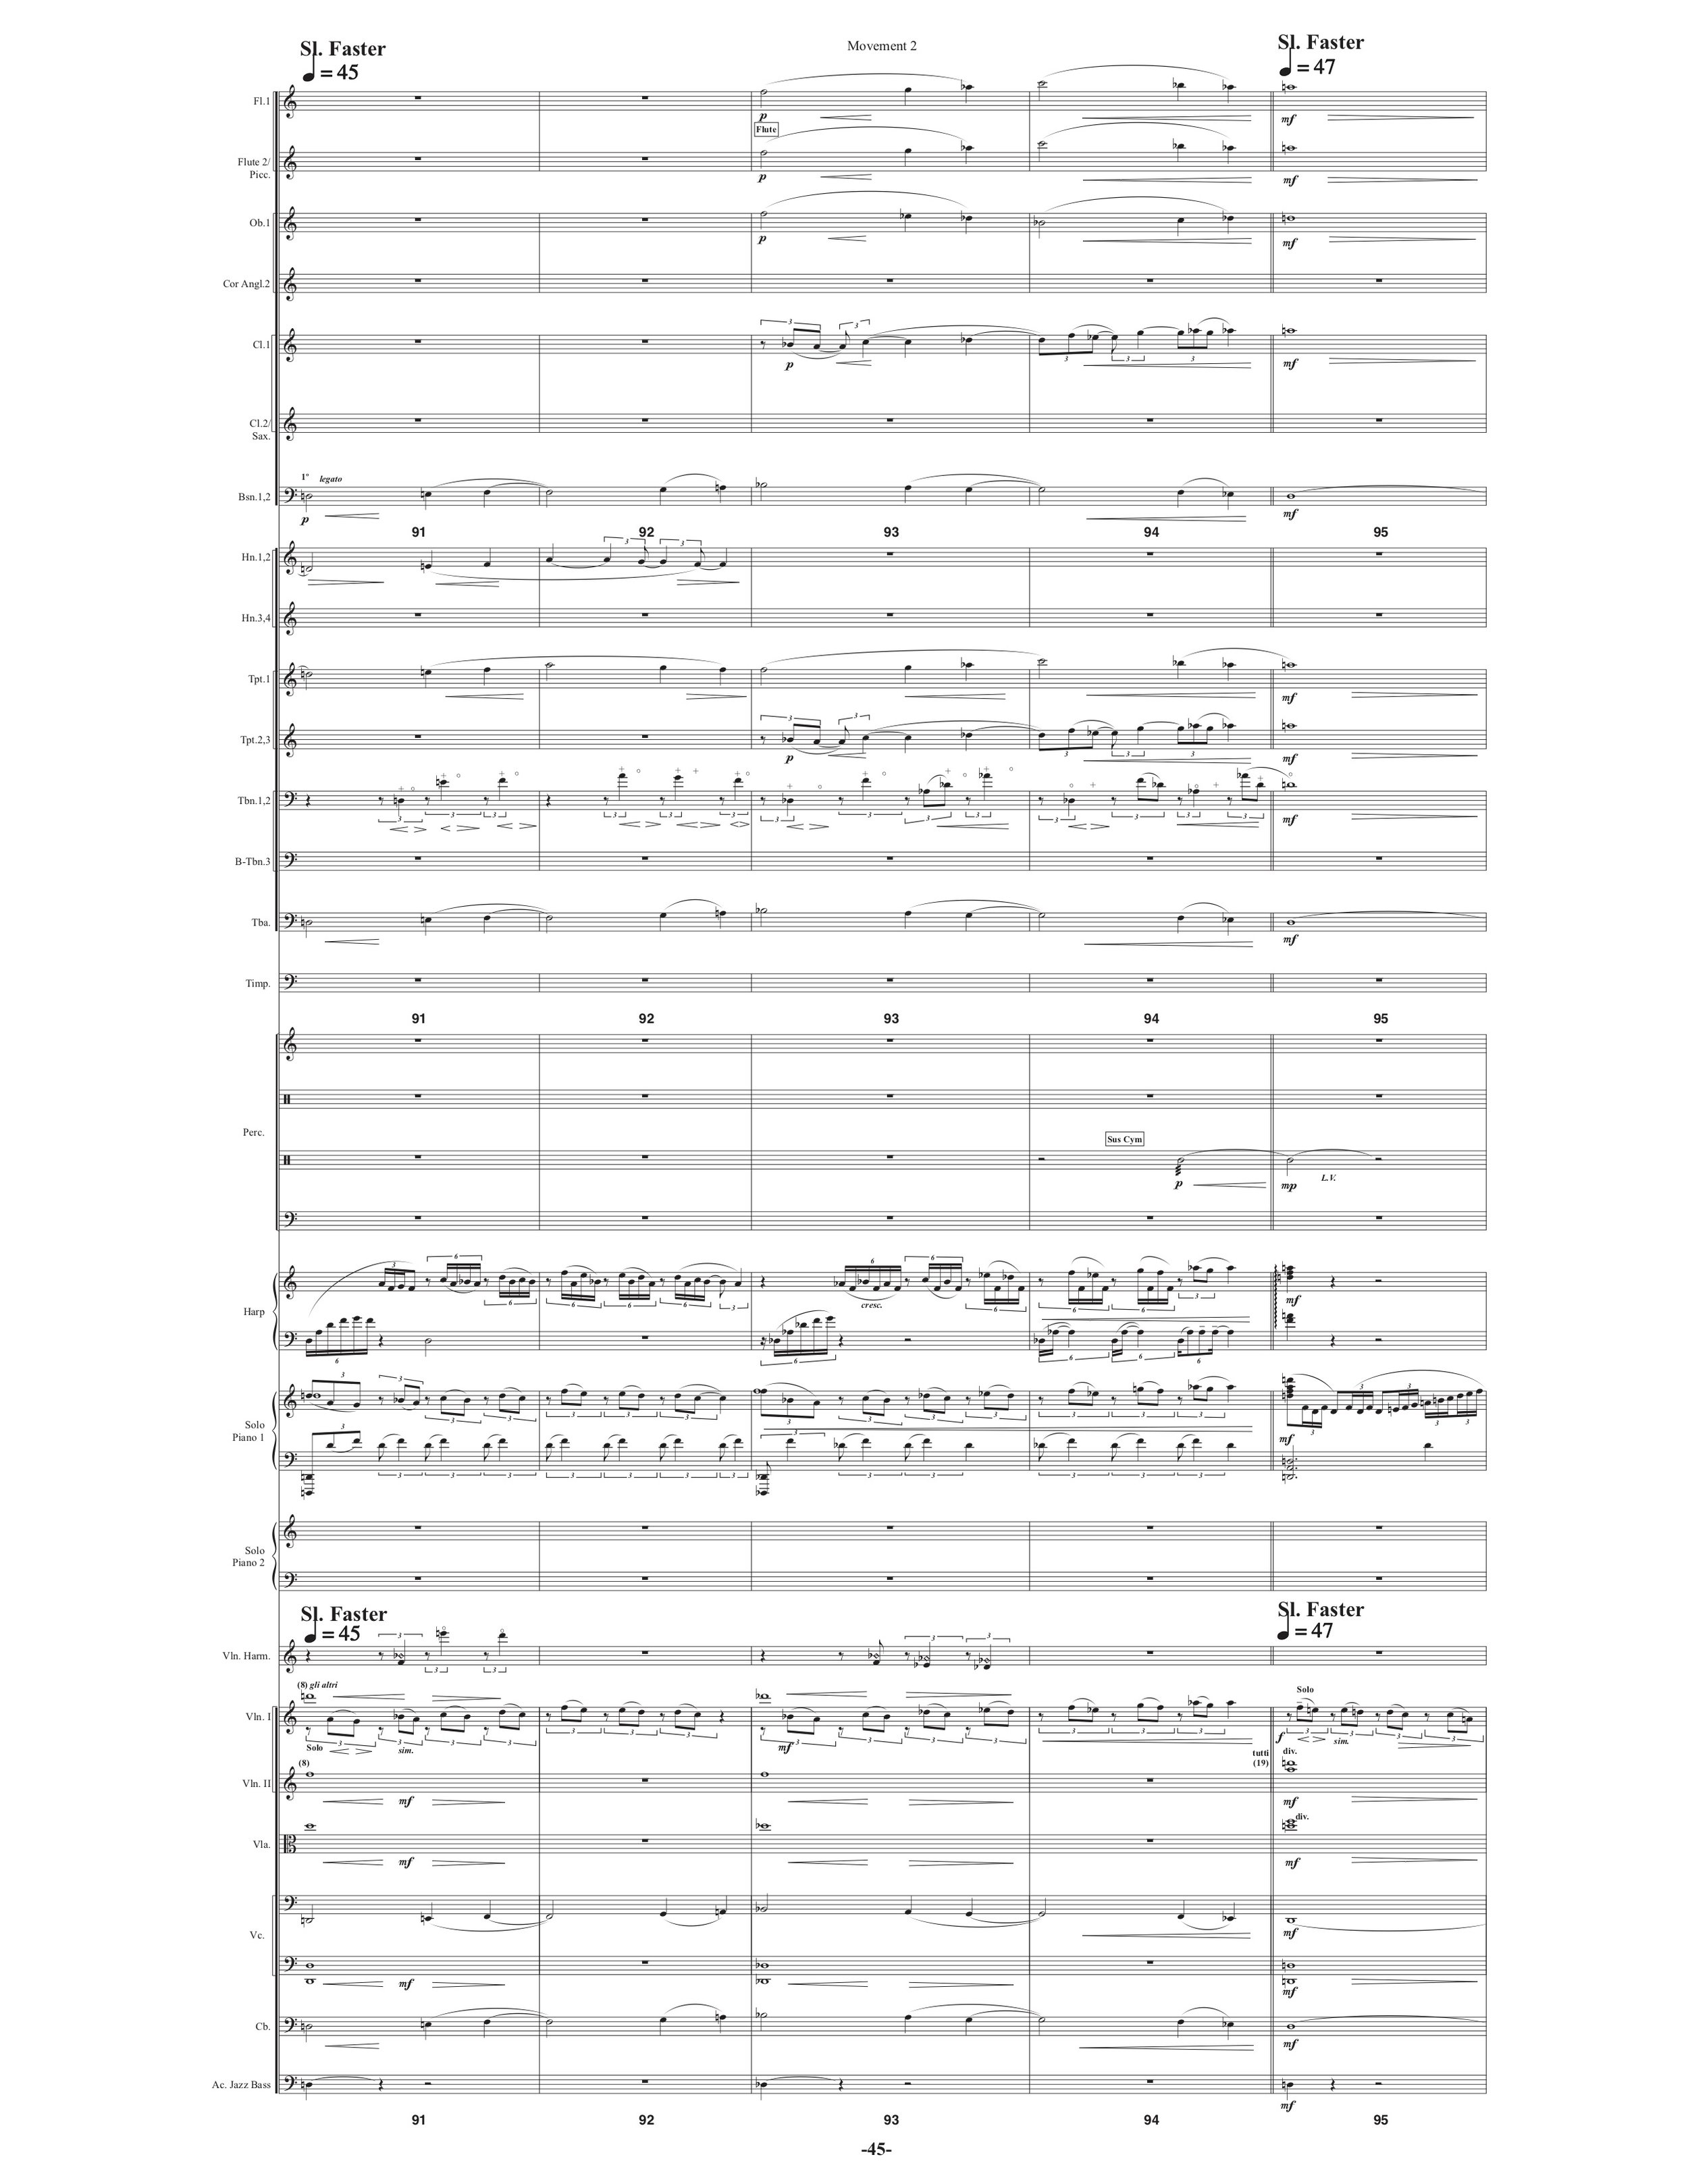 Symphony_Orch & 2 Pianos p50.jpg